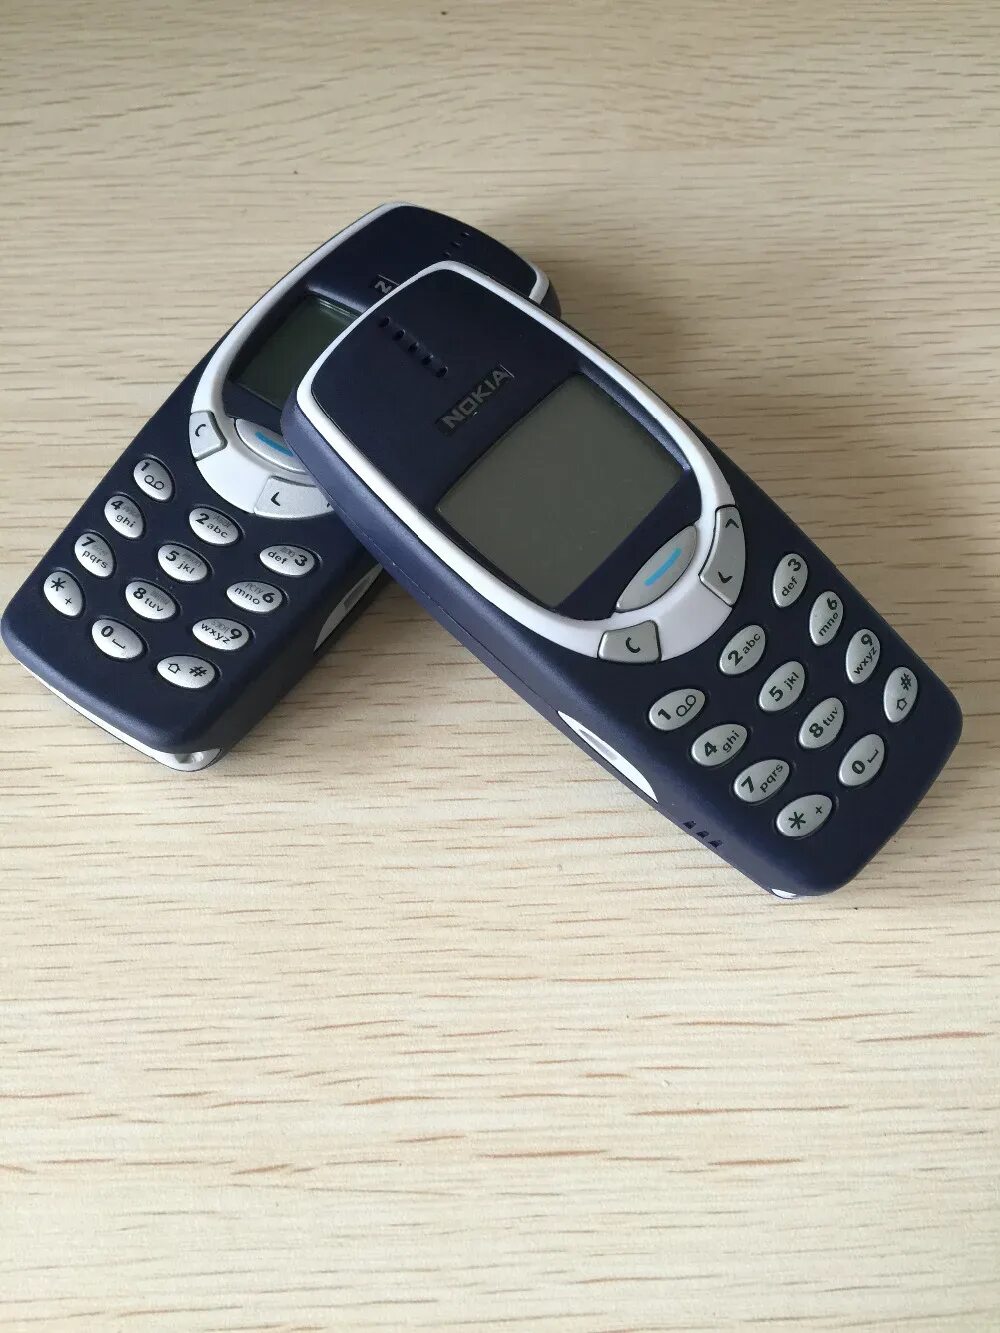 Фото старого нокиа. Nokia 3310. Nokia 3310 2g. Nokia 3310 GSM. Nokia 3310 2.